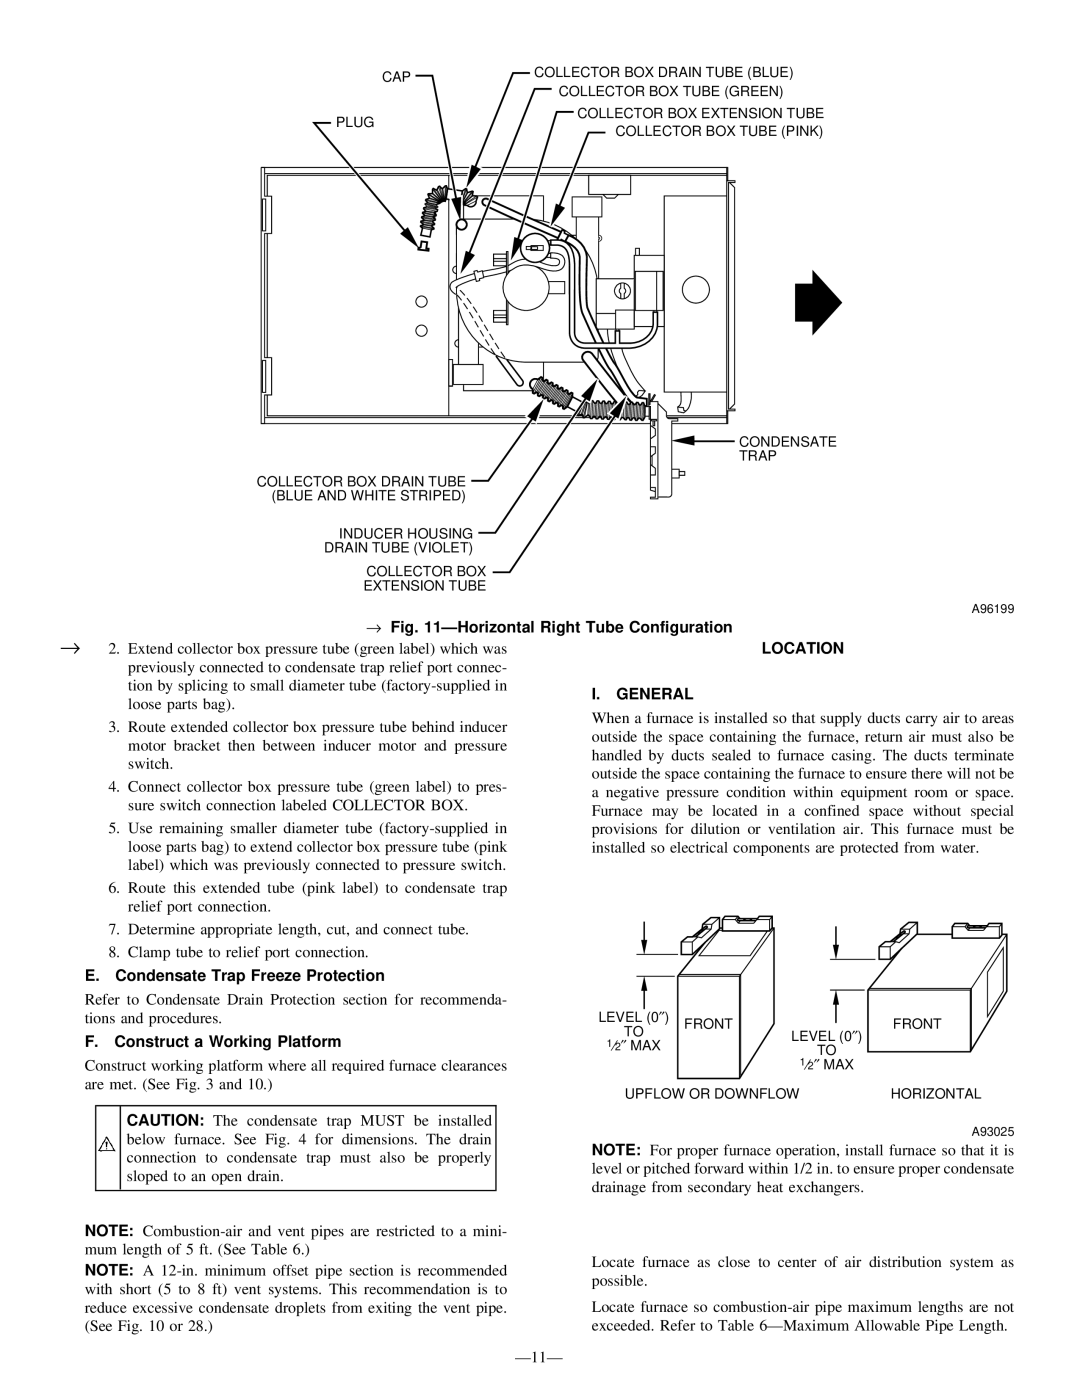 Bryant 340MAV instruction manual → ÐHorizontal Right Tube Configuration, Location 